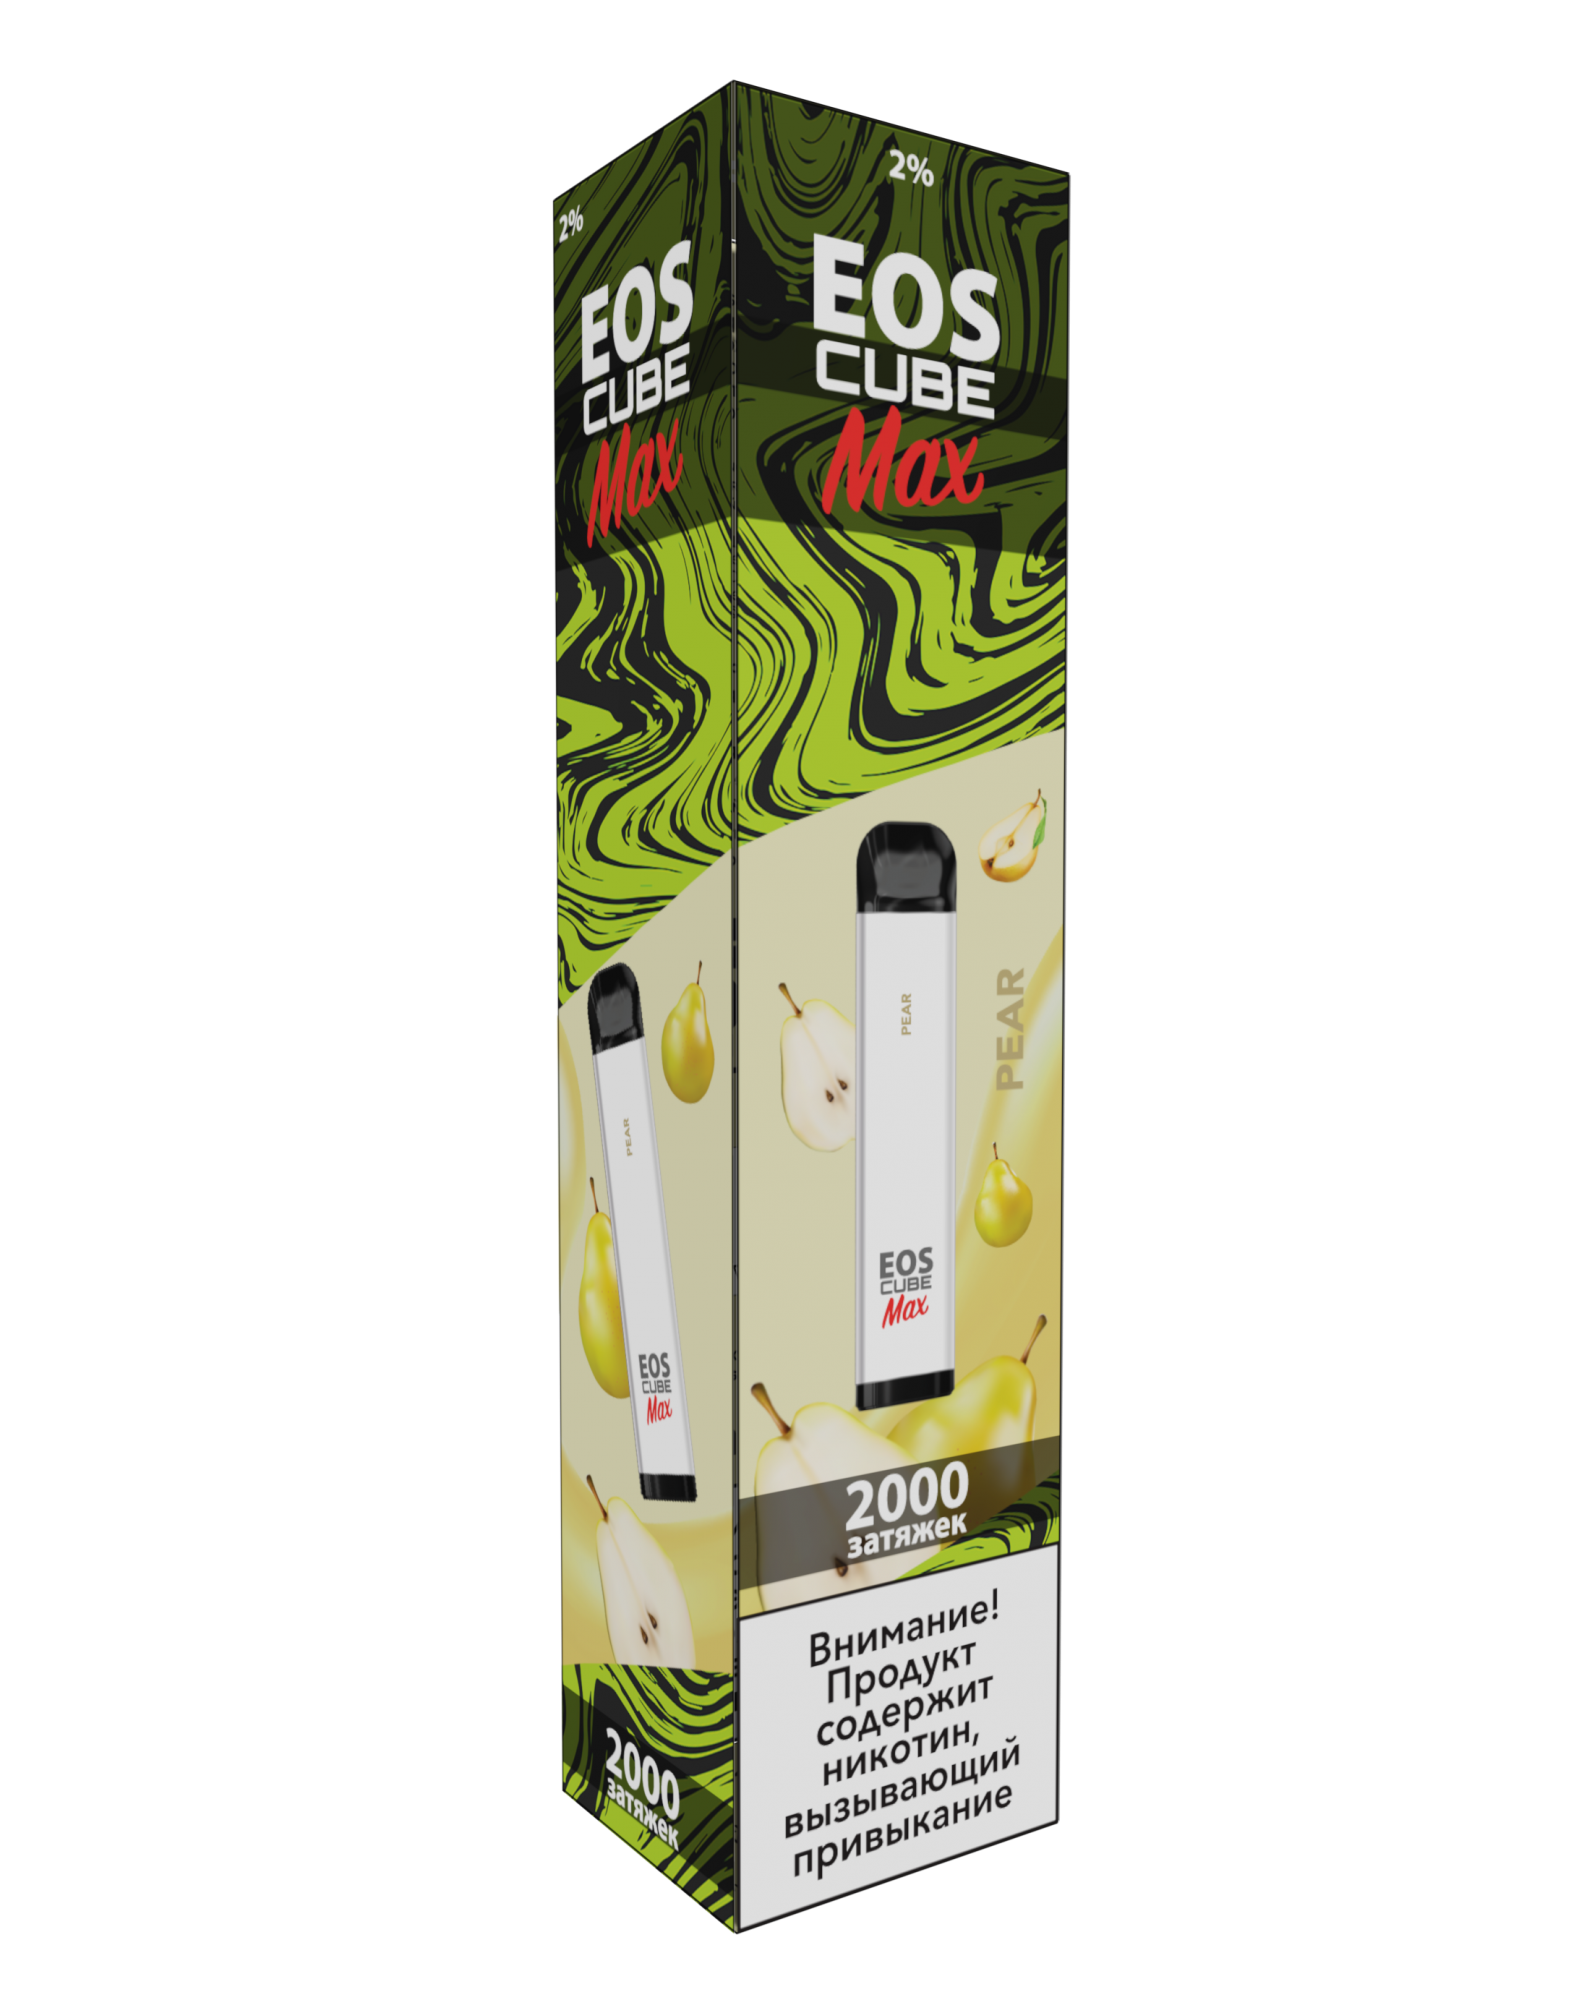 Электронные сигареты EOS Cube Max. EOS Cube one 1500 затяжек. EOS Cube Max 2000. Одноразки EOS Cube. Cube max